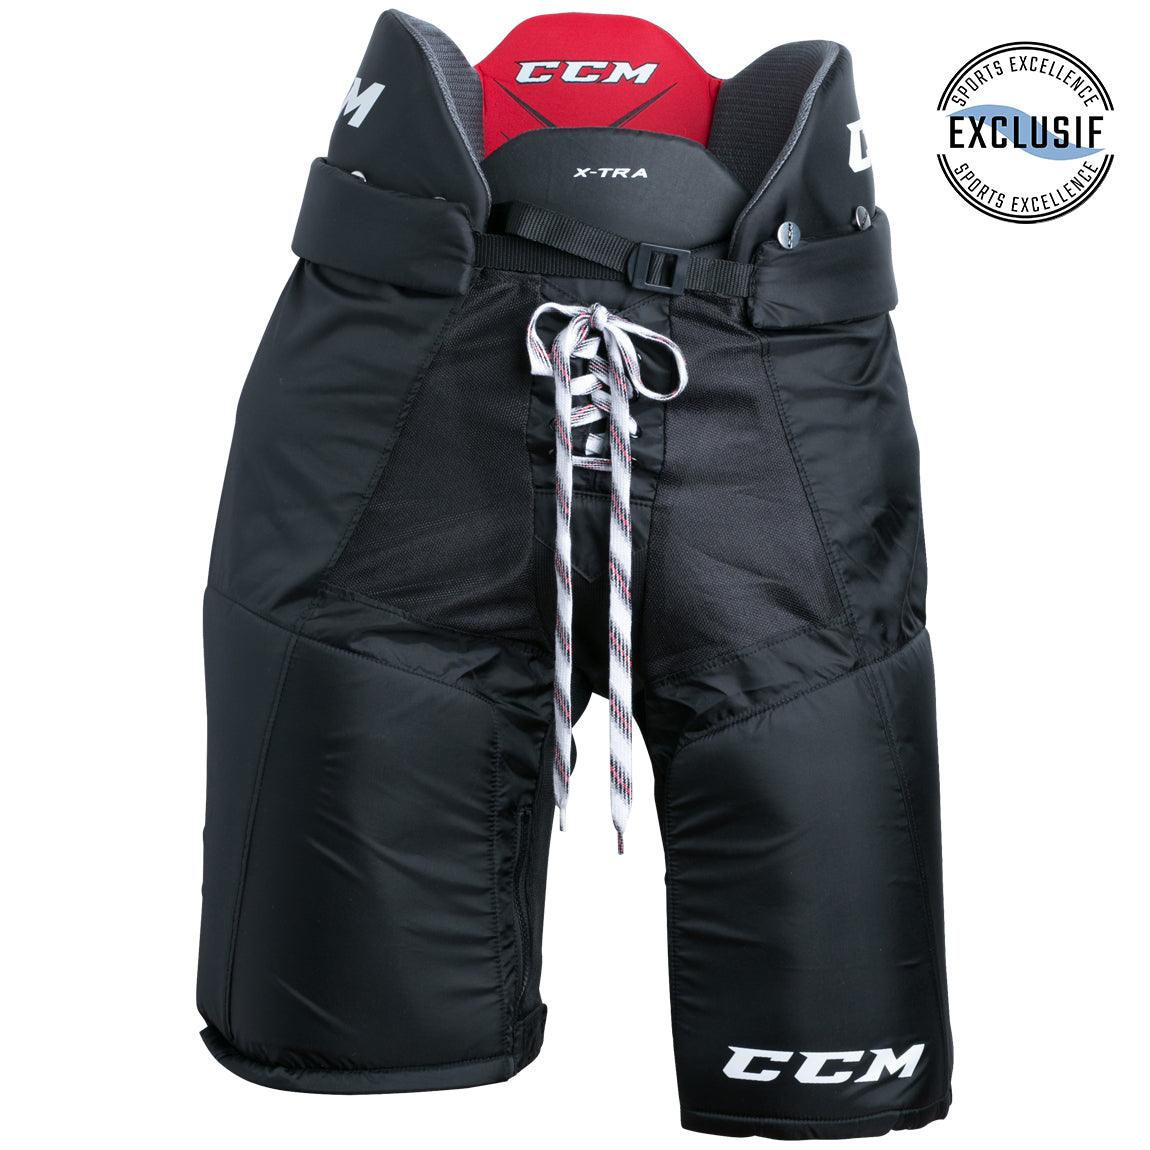 Senior JetSpeed XTRA Hockey Pants by CCM